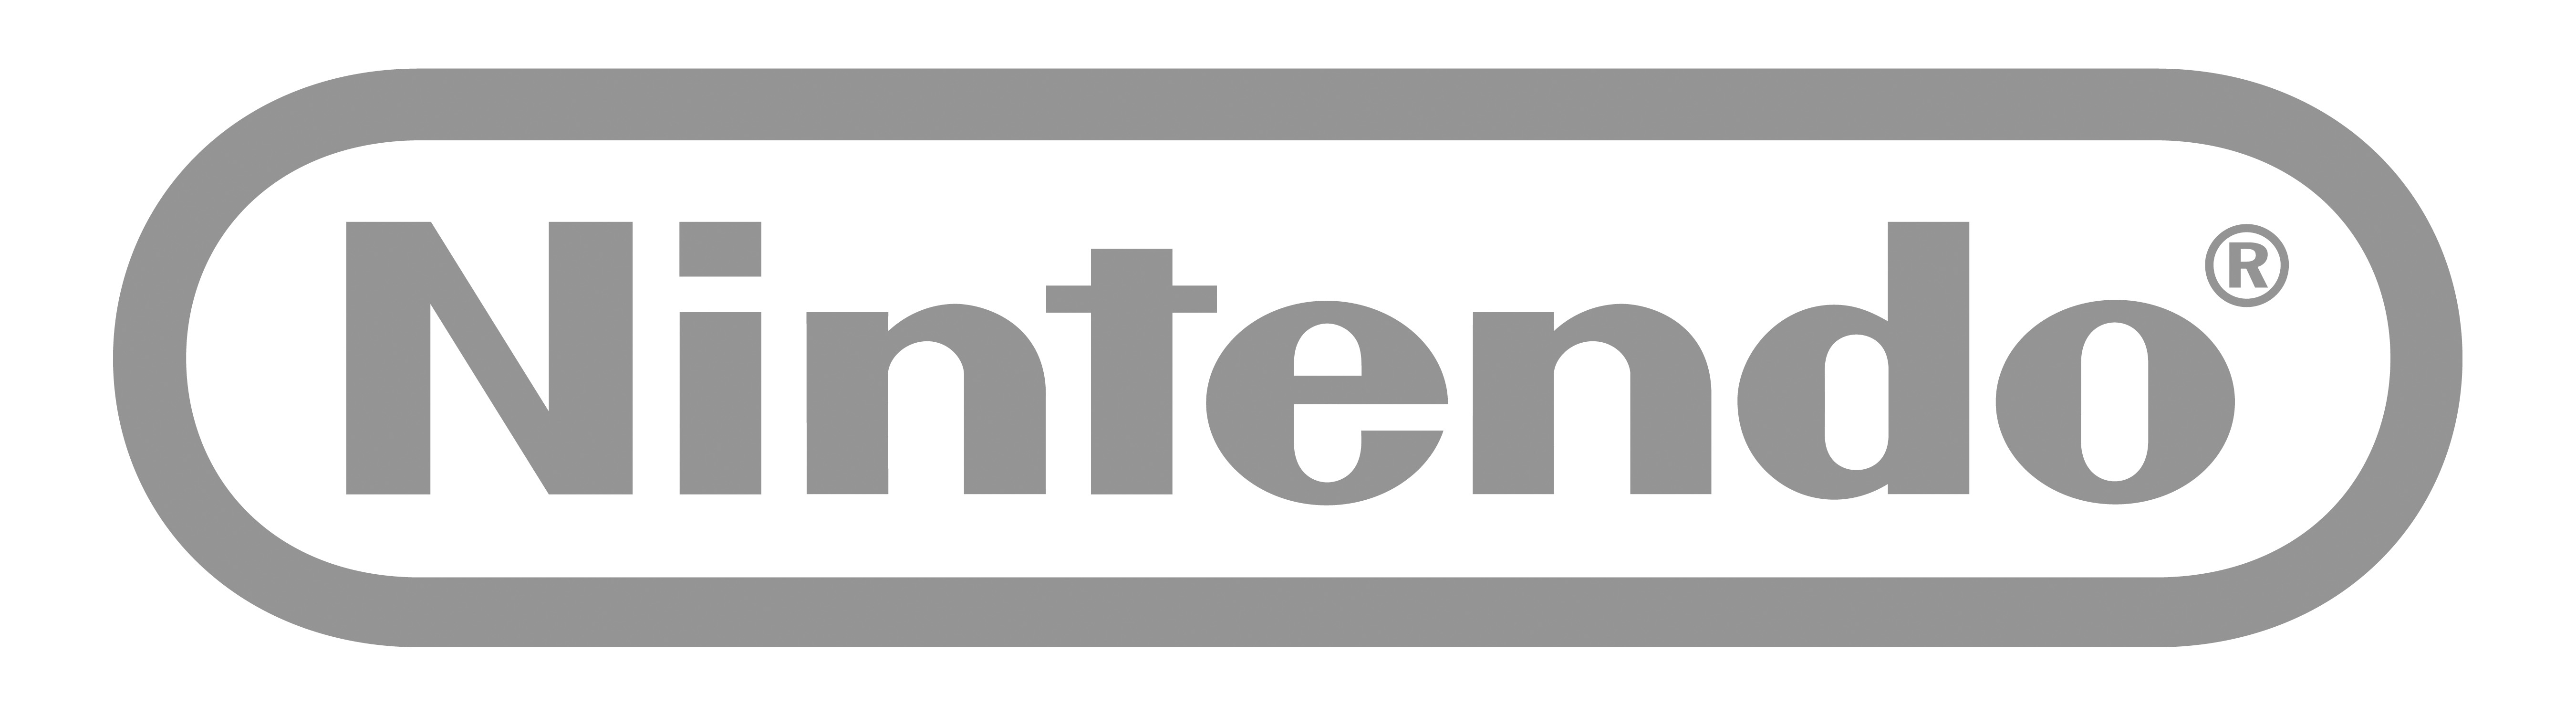 GoldenEye 007 coming soon to Nintendo Switch Online - Jaxon